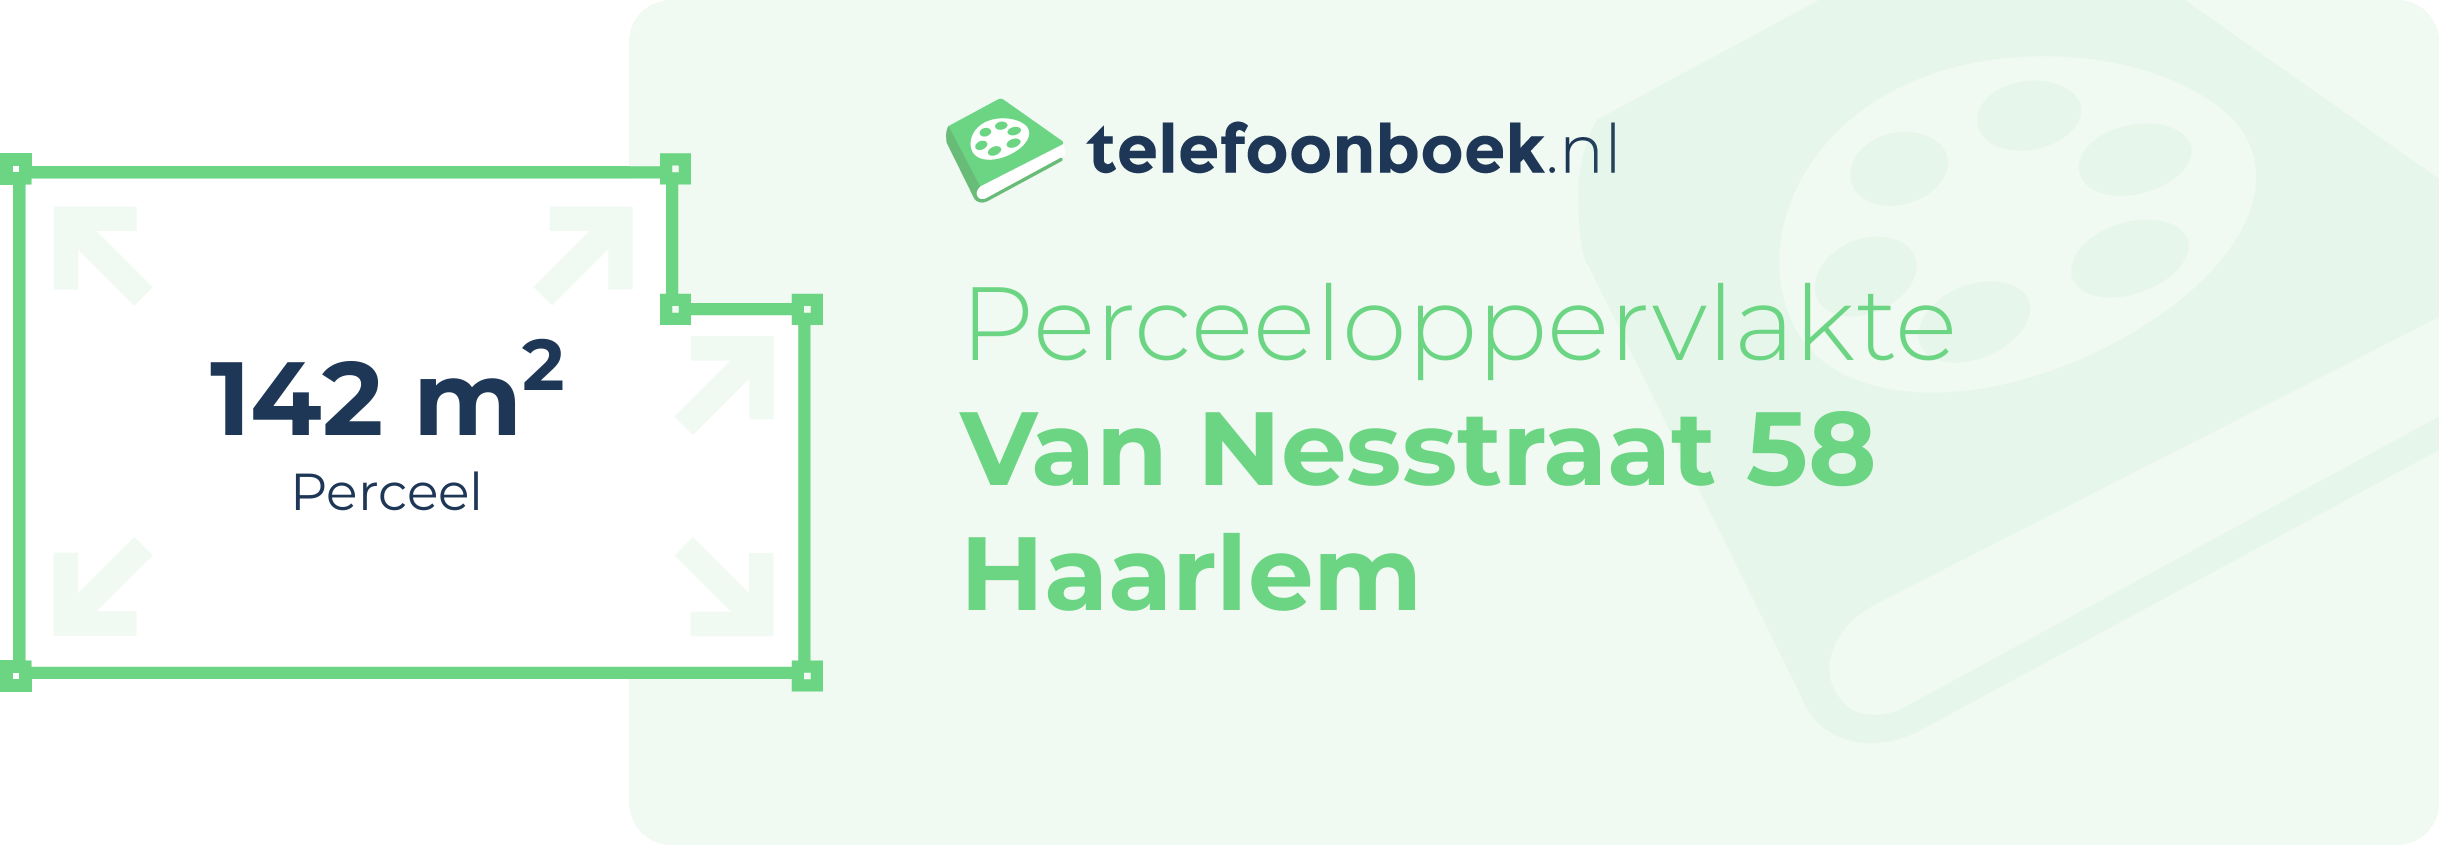 Perceeloppervlakte Van Nesstraat 58 Haarlem